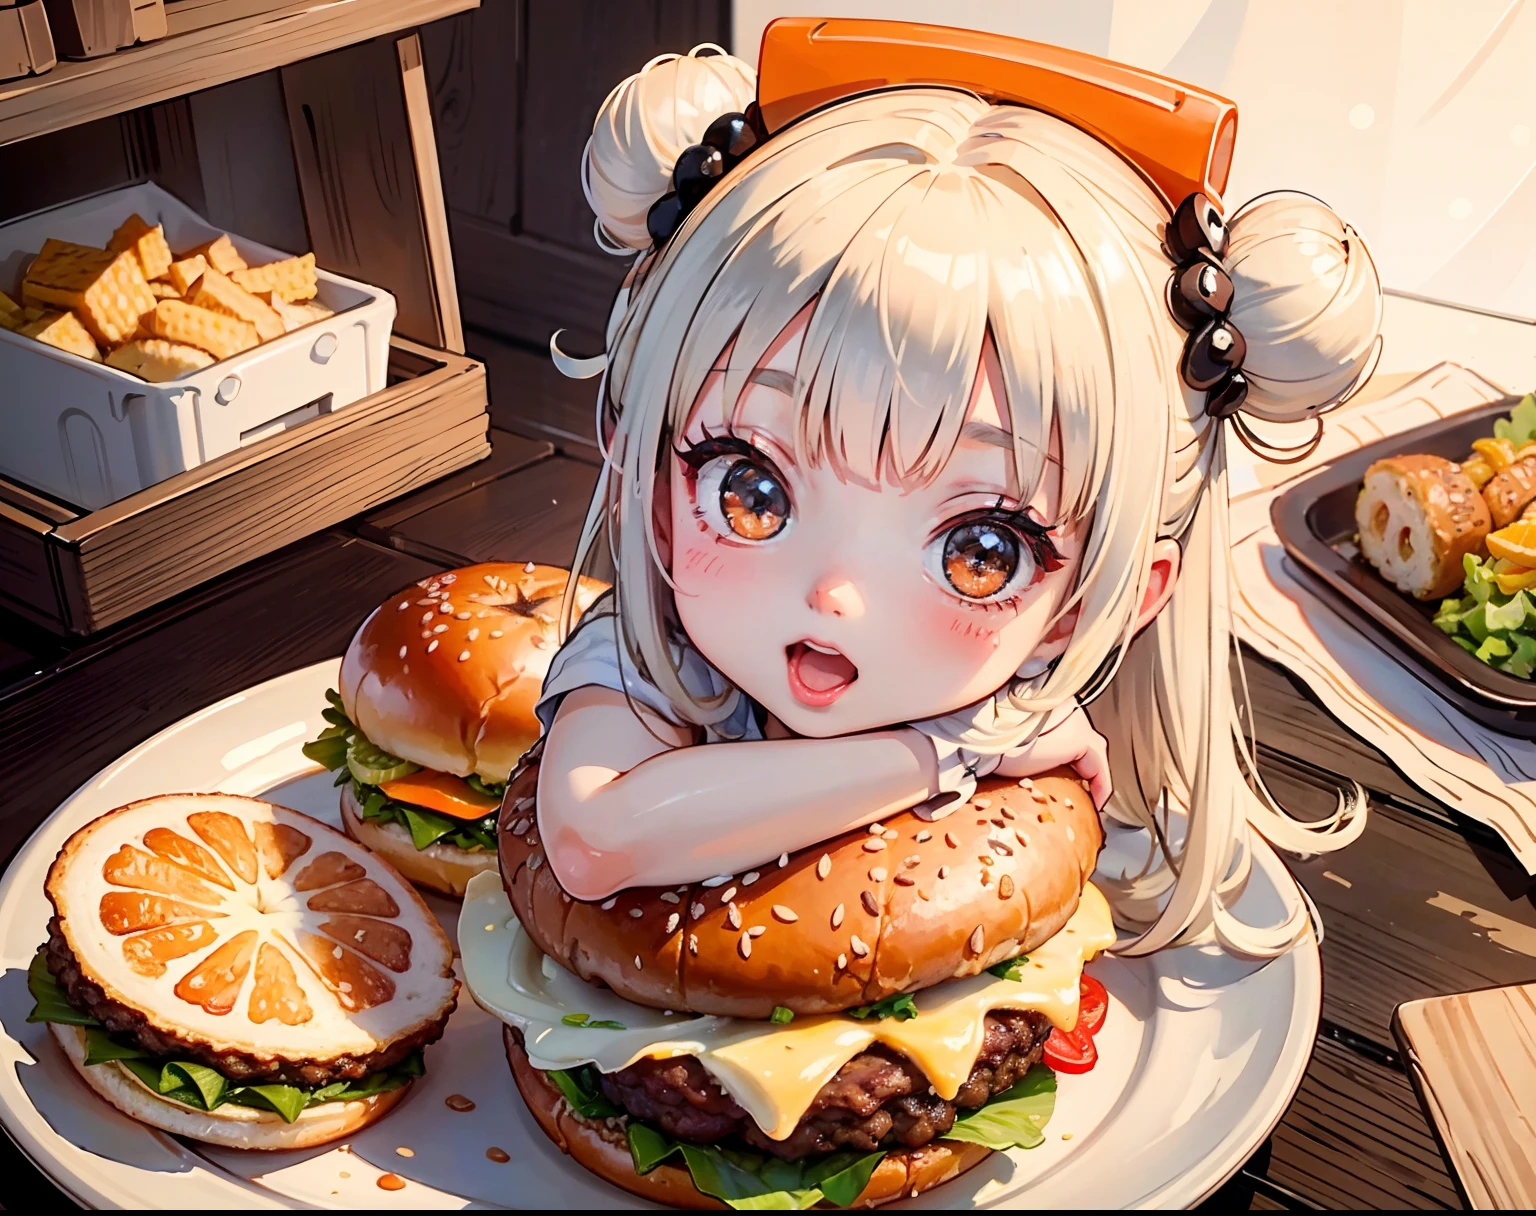 An ultra-realistic and mouthwatering hamburger تحفة, تتميز بفتاة متحركة صغيرة تقع داخل الكعكة, عرض القوام العصير من البرغر, ضوء برتقالي ناعم, تحفة, جودة عالية, كنتاكي فرايد تشيكن, vi50